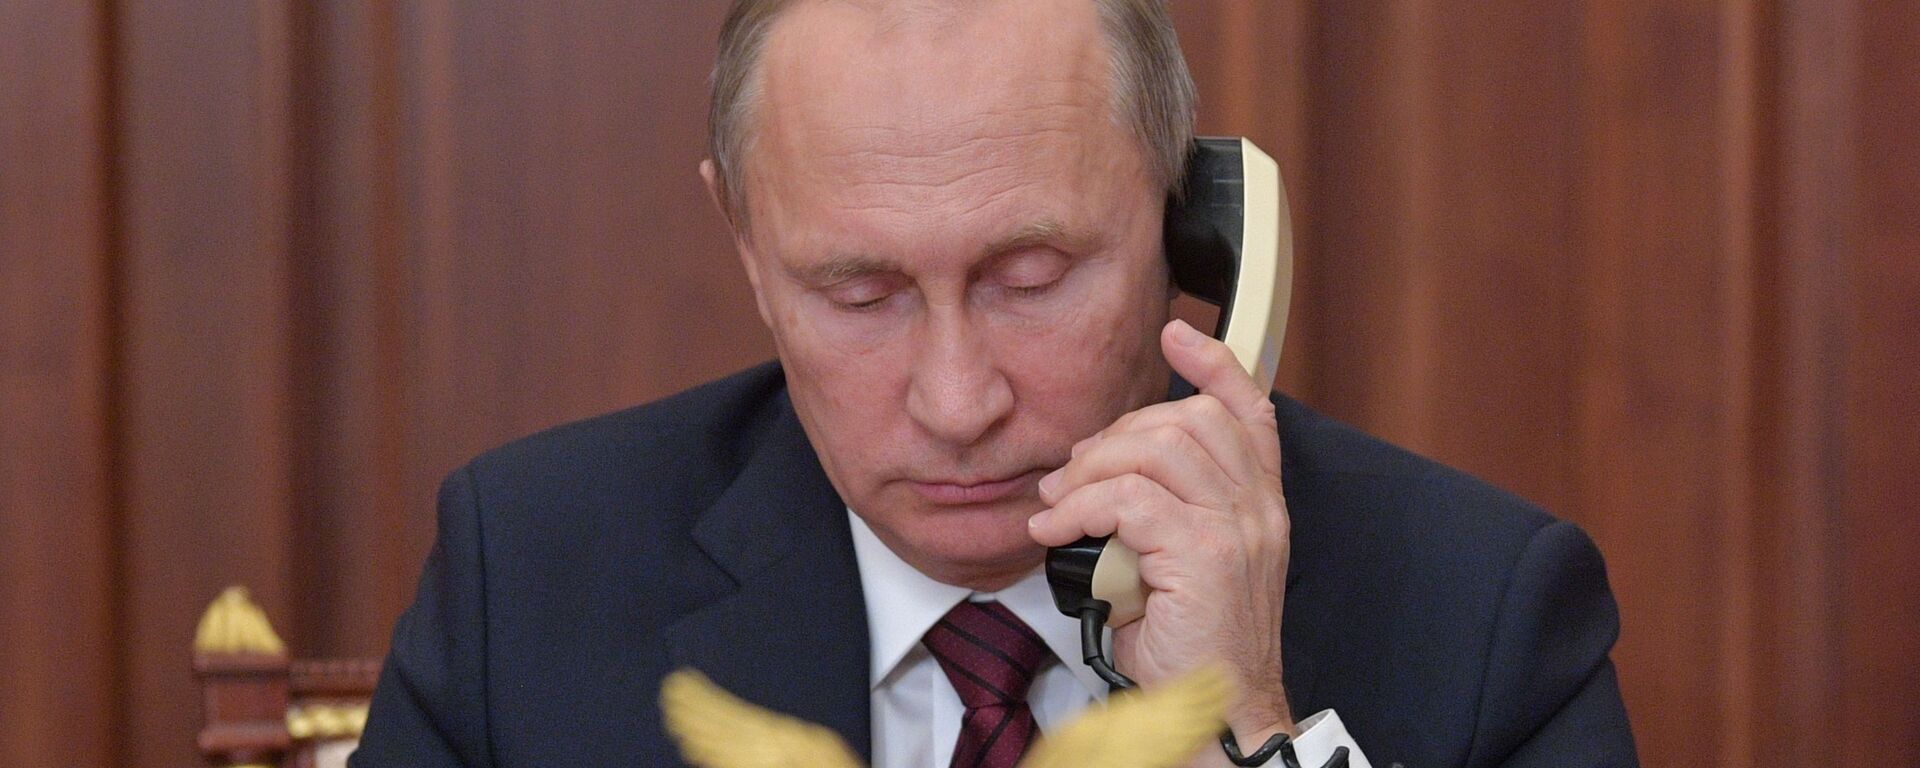 Президент РФ Владимир Путин во время телефонного разговора - Sputnik Тоҷикистон, 1920, 22.07.2021